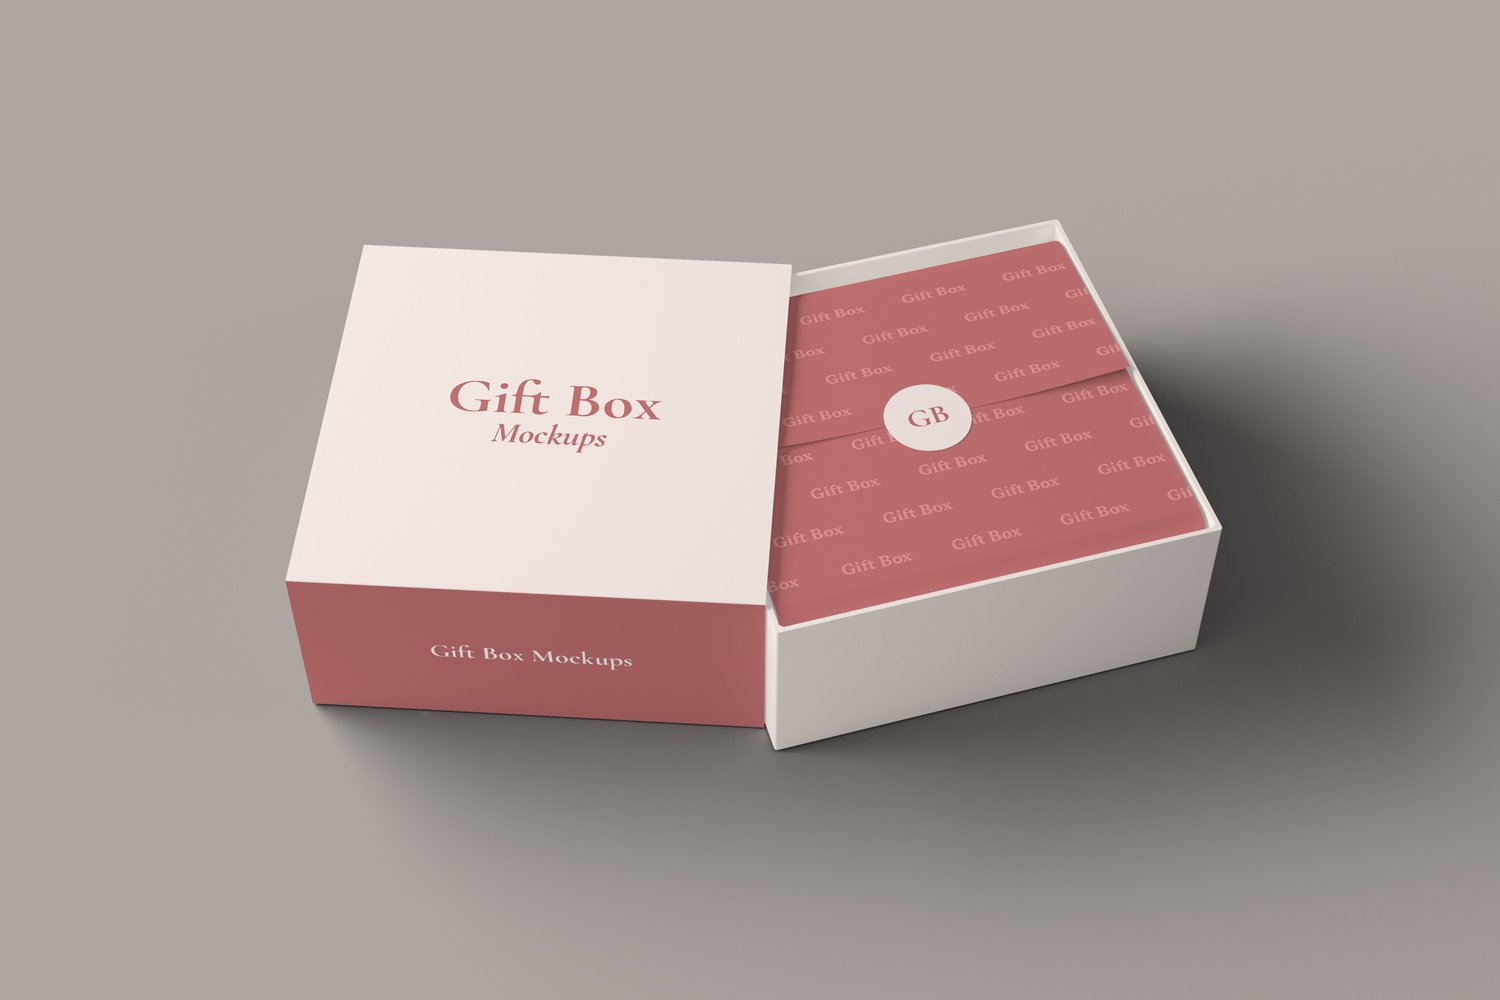 06 gift box mockups photoshop psd 499